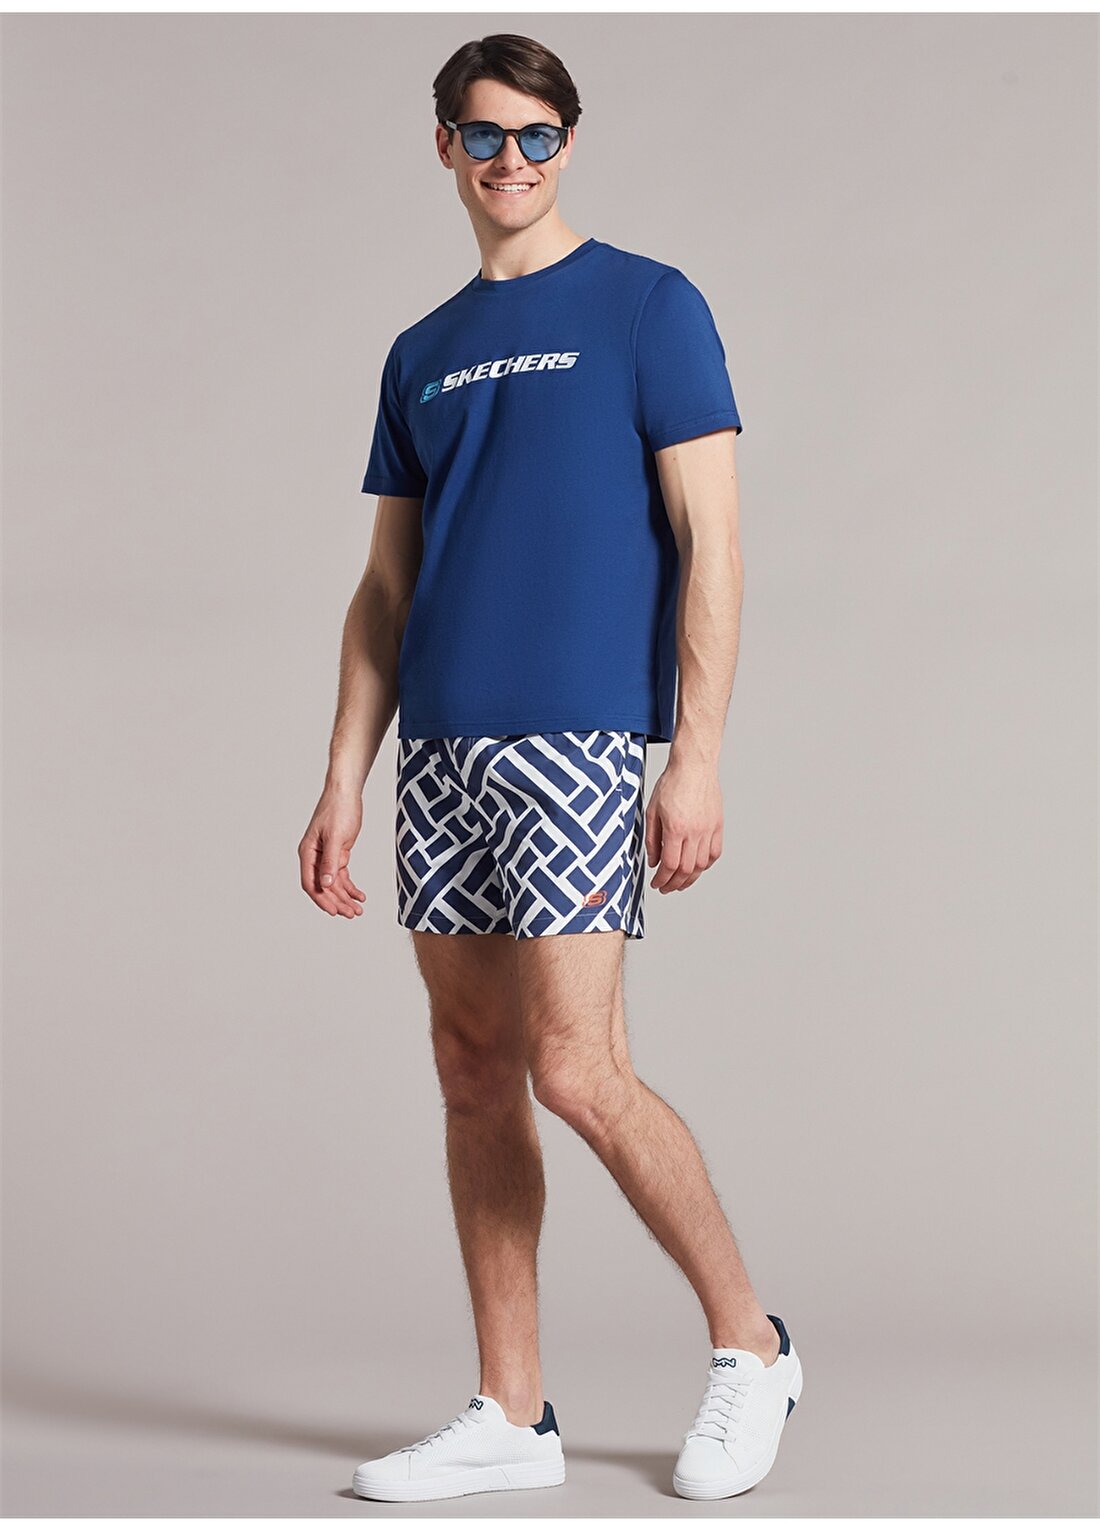 Skechers Normal Mavi Erkek Şort S231384-422 M Swimwear Printed 5 In